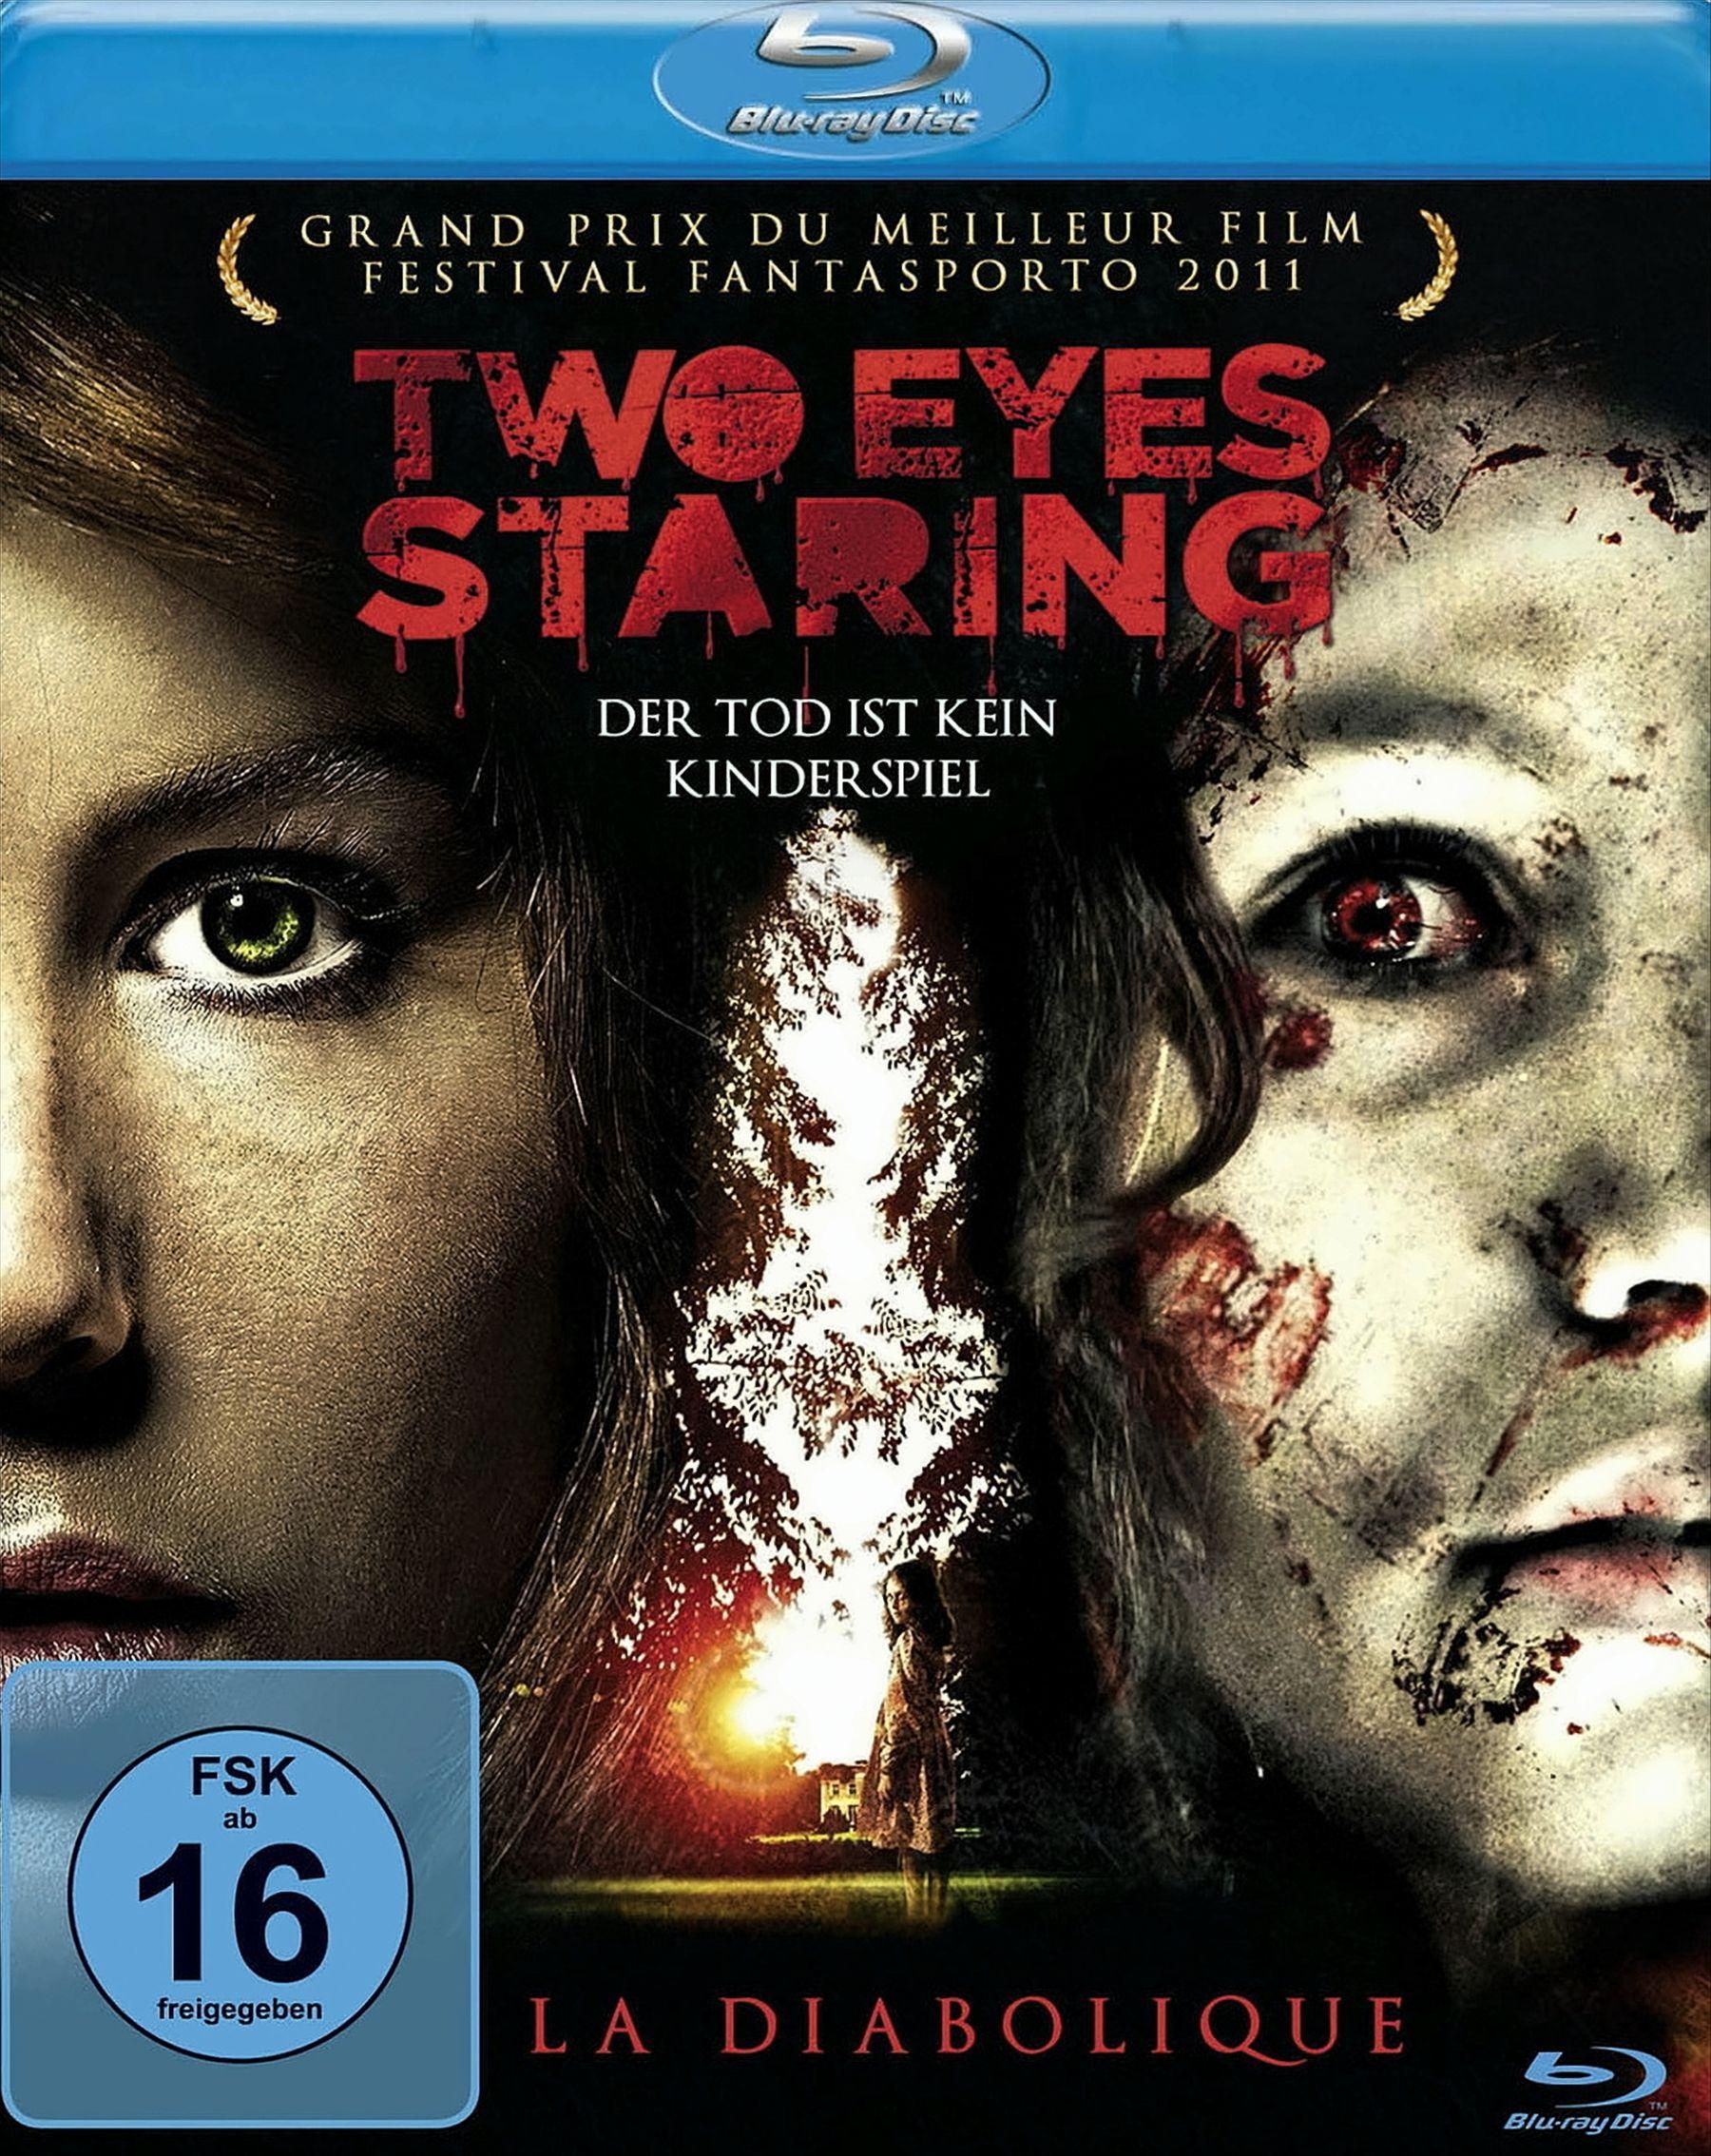 Two Eyes Staring - Der Kinderspiel Blu-ray kein ist Tod